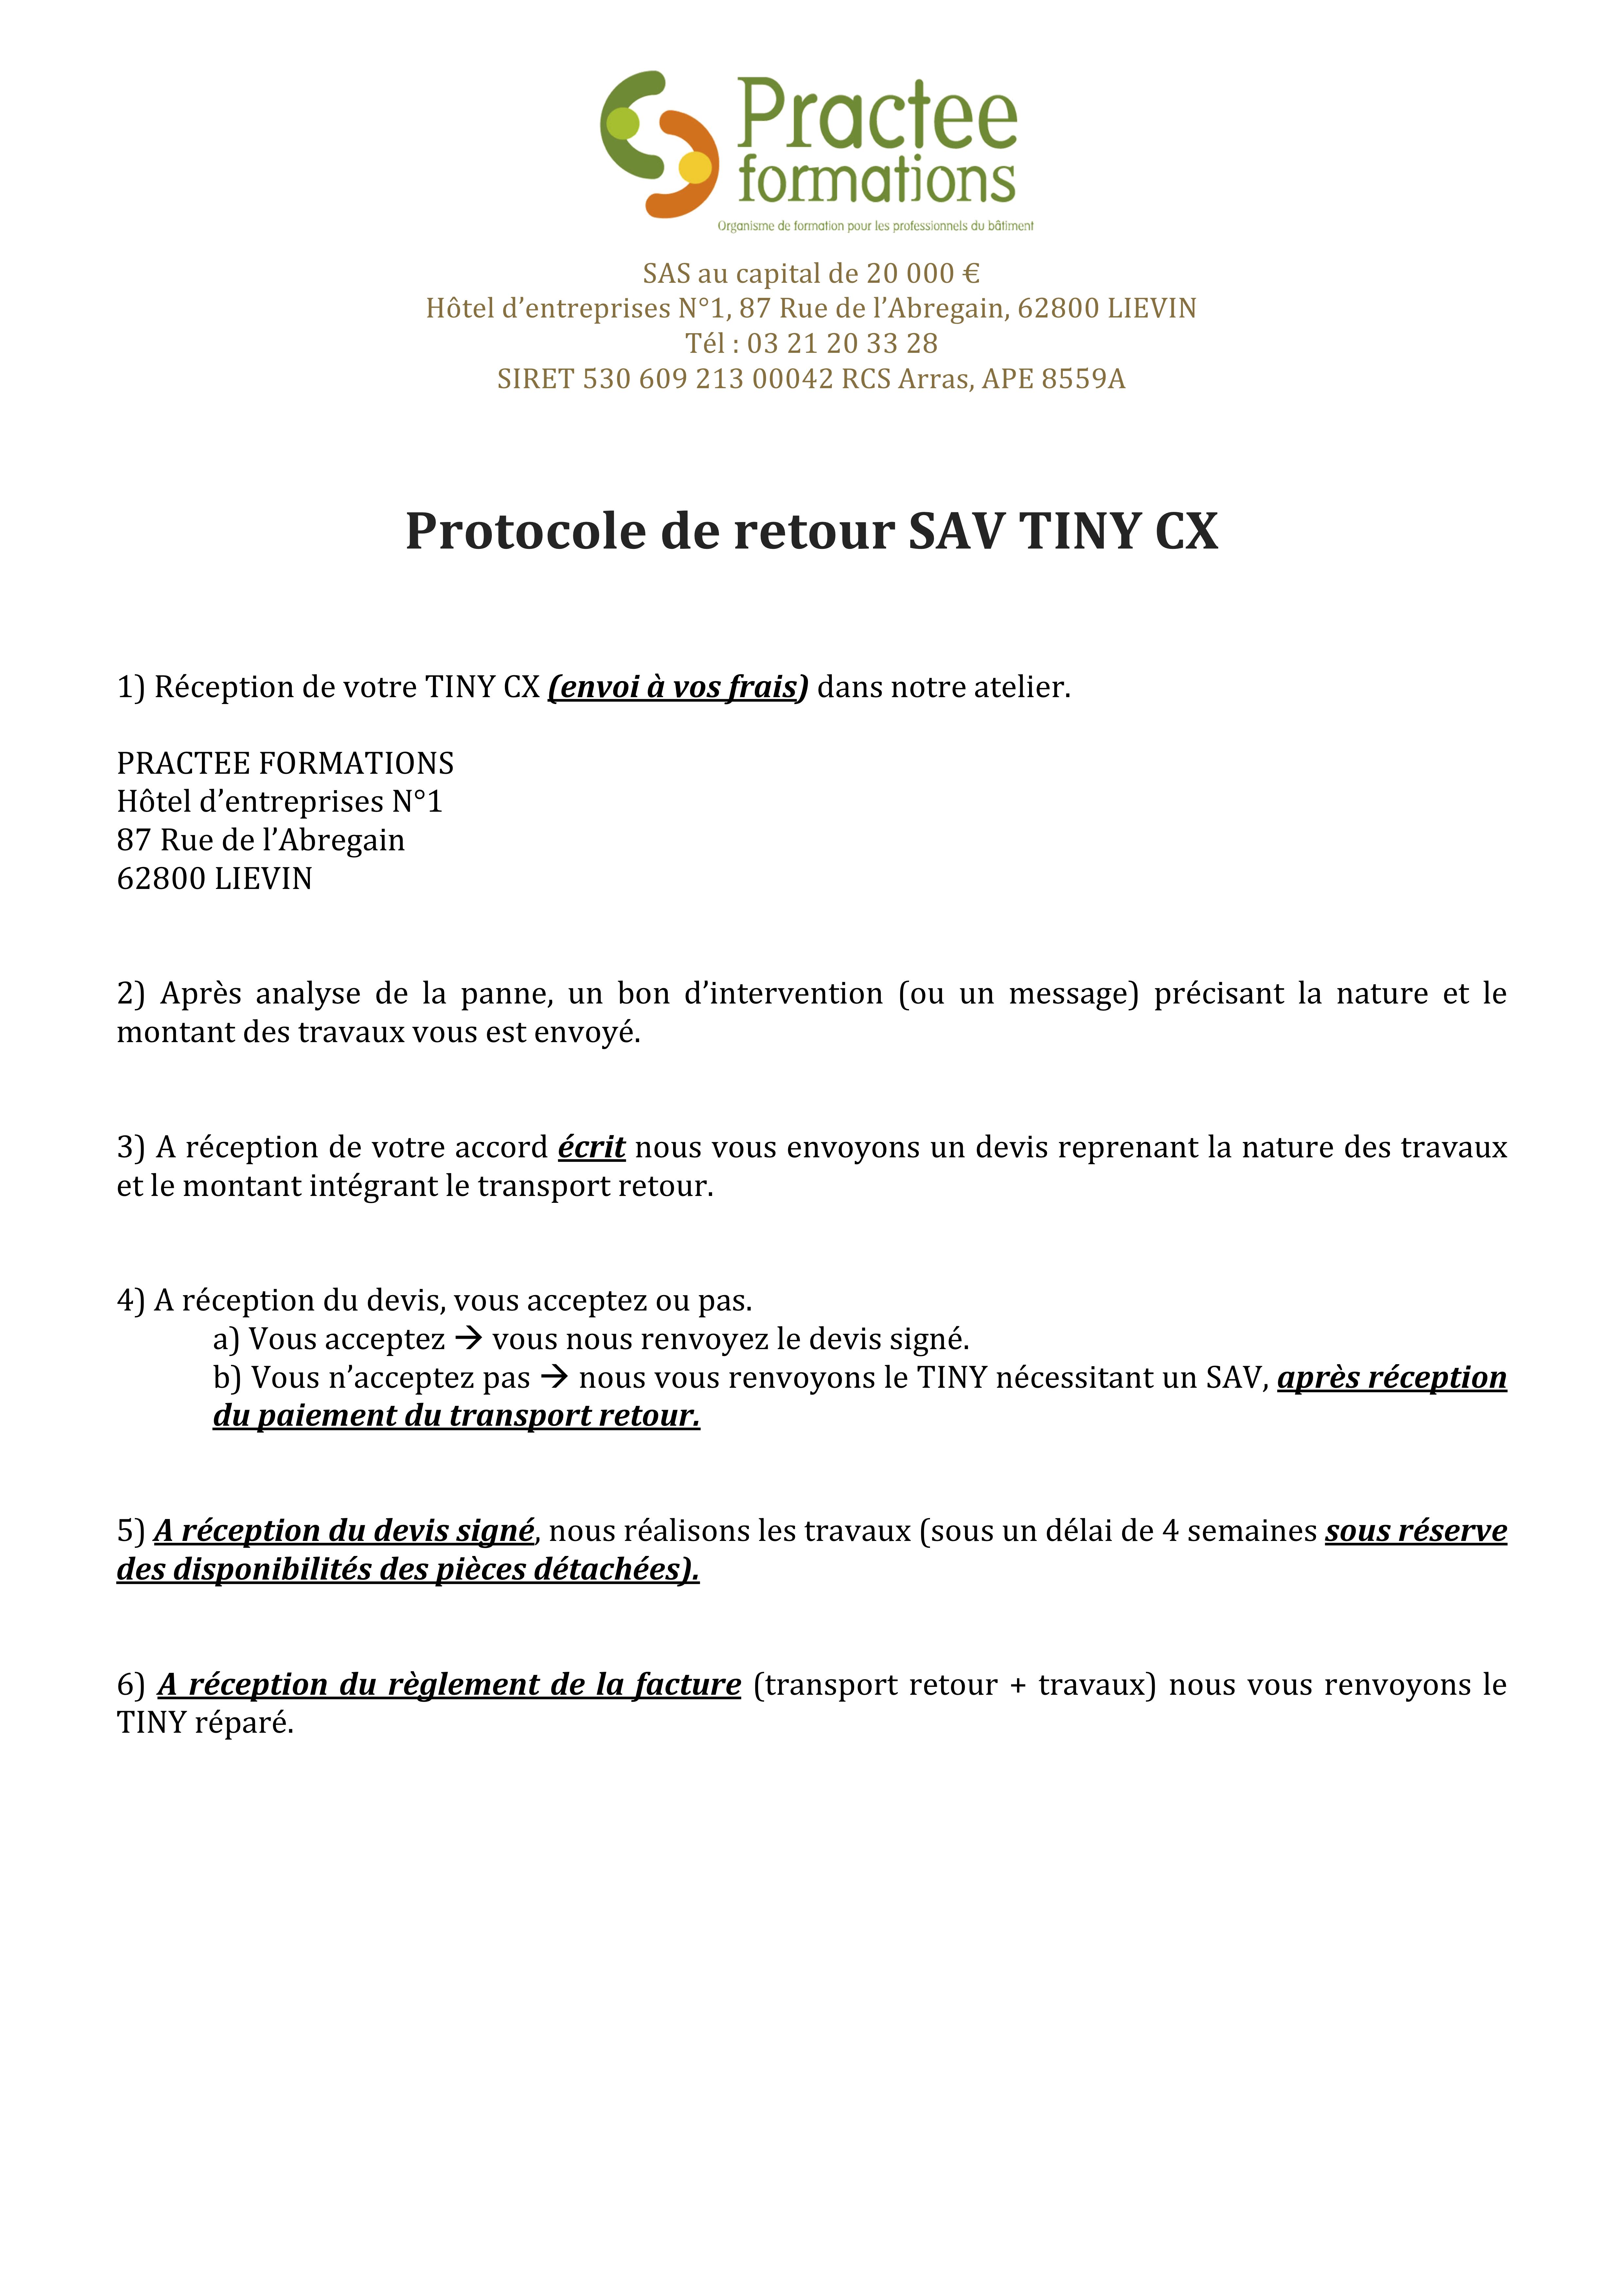 Protocole_Retour_et_SAV_TINY_PRACTEE.jpg